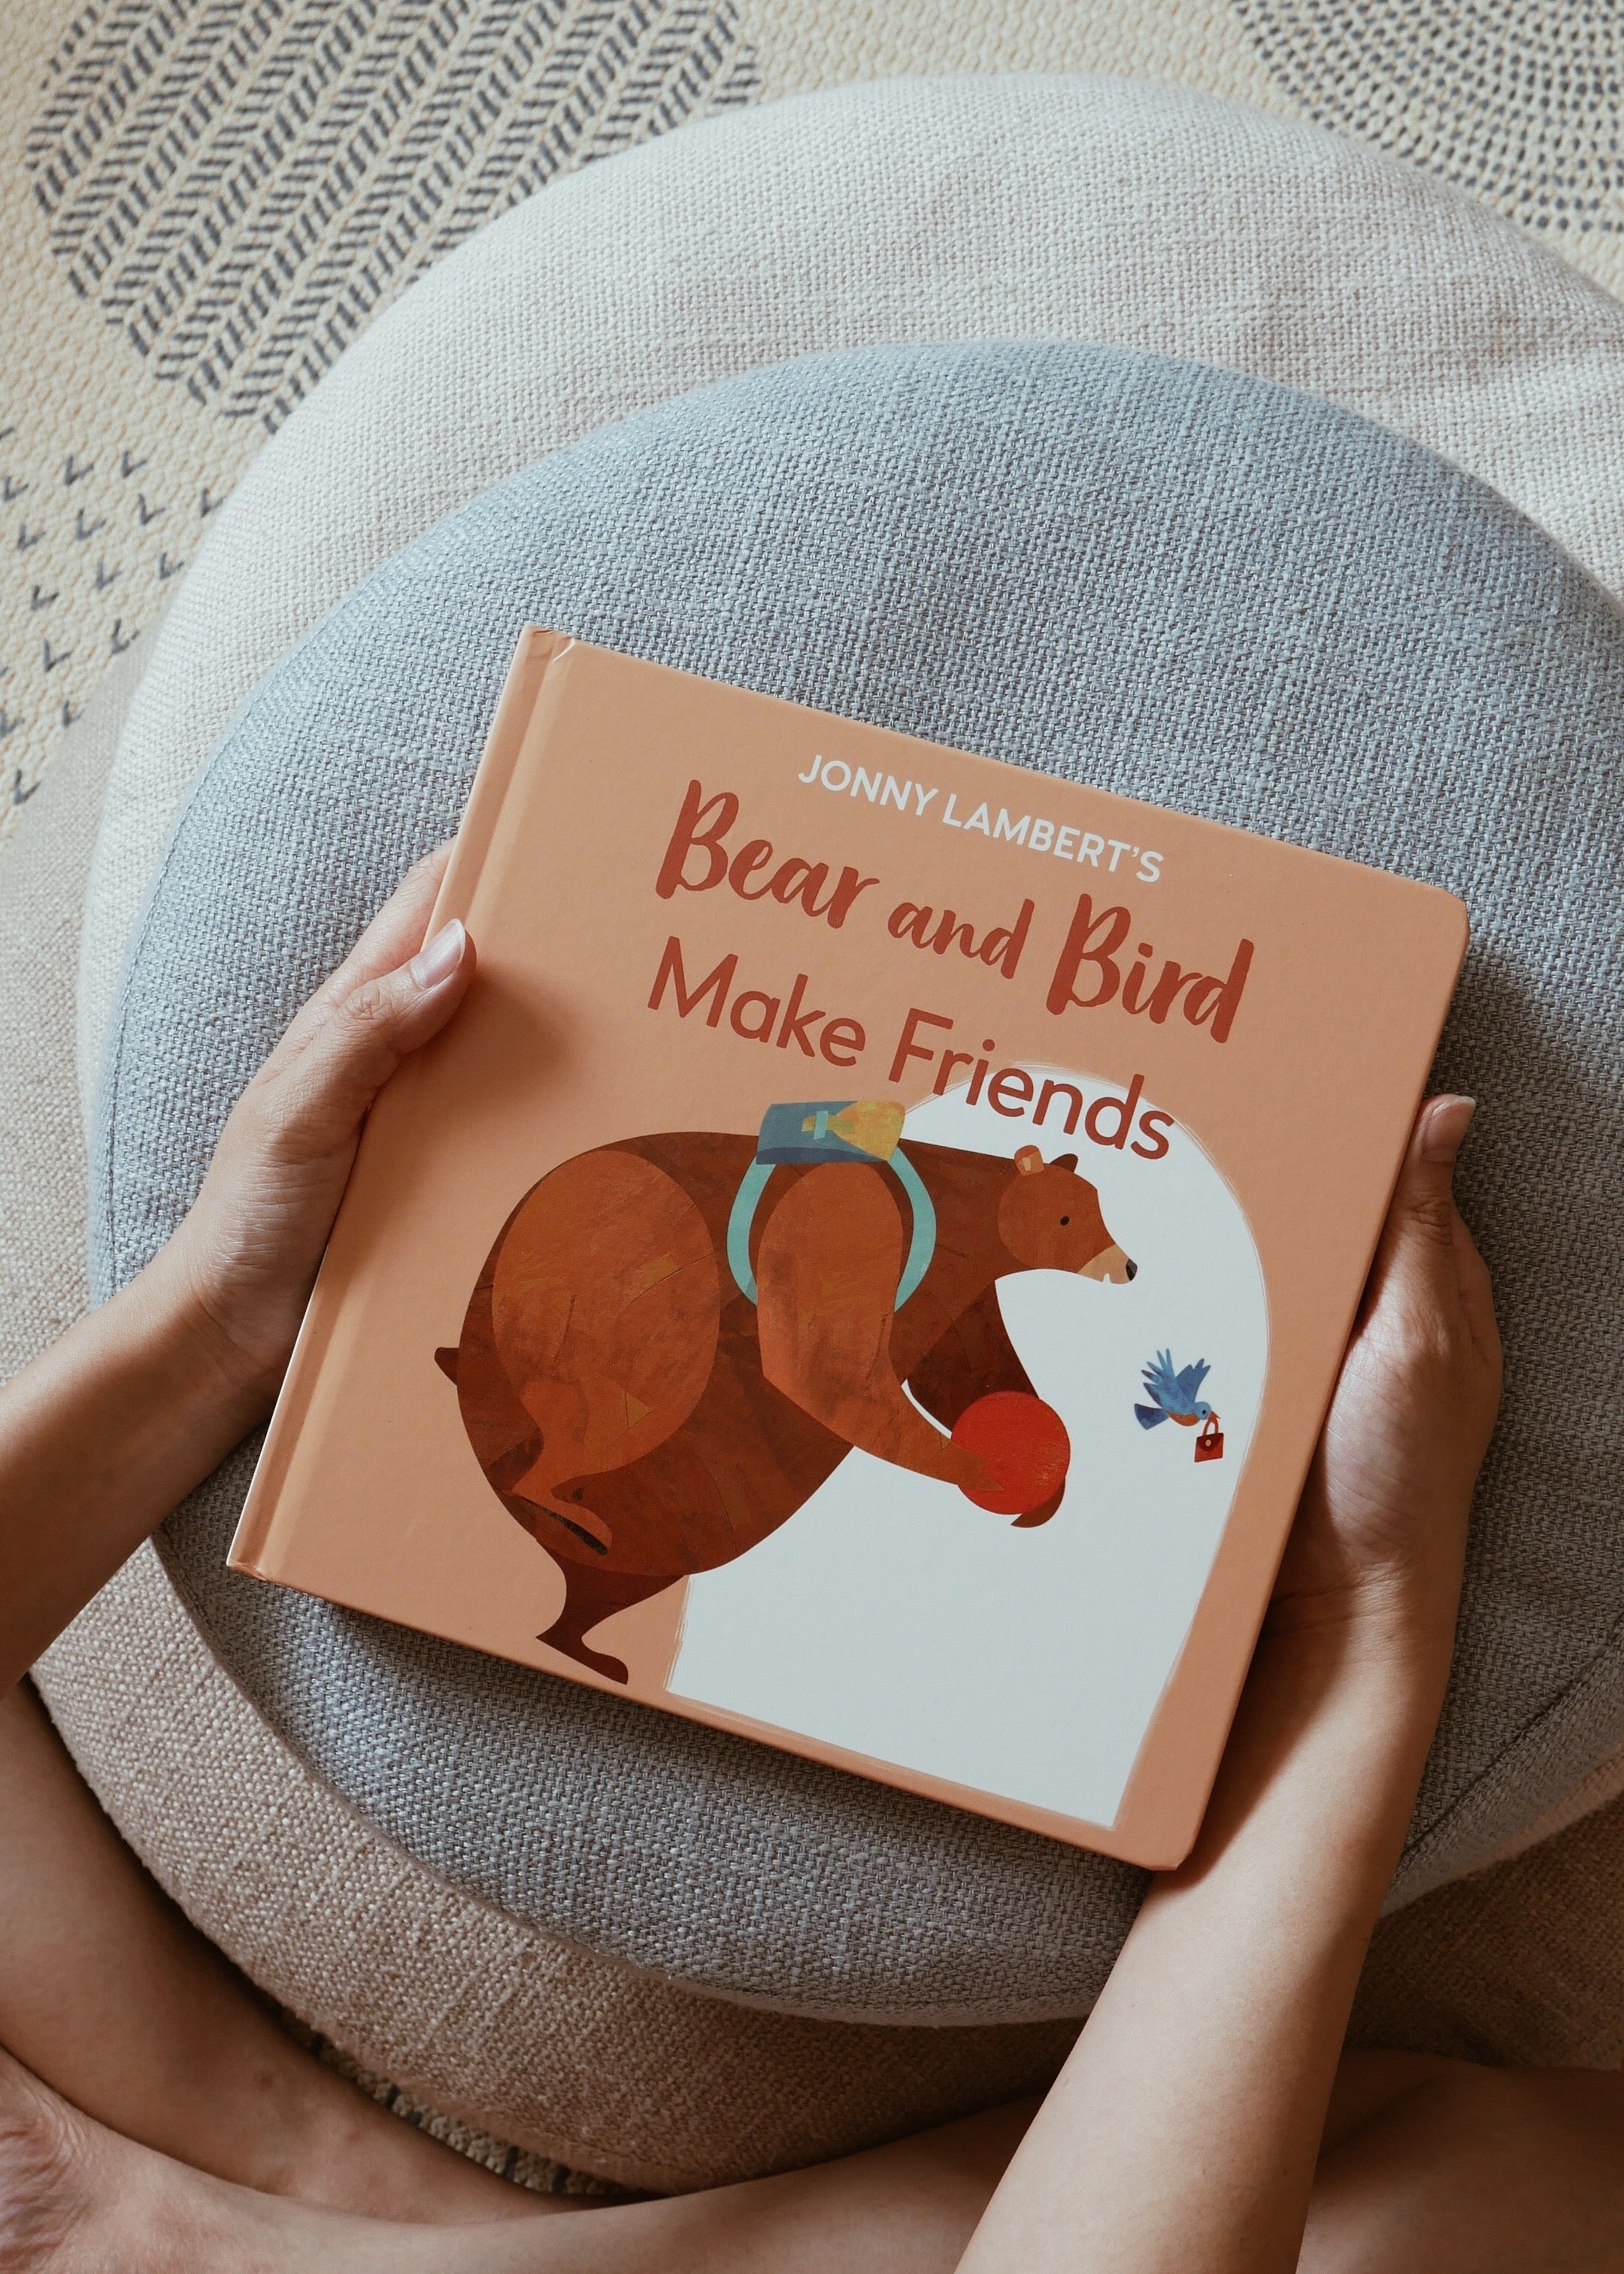 Johnny Lambert's Bear and Bird Book Series